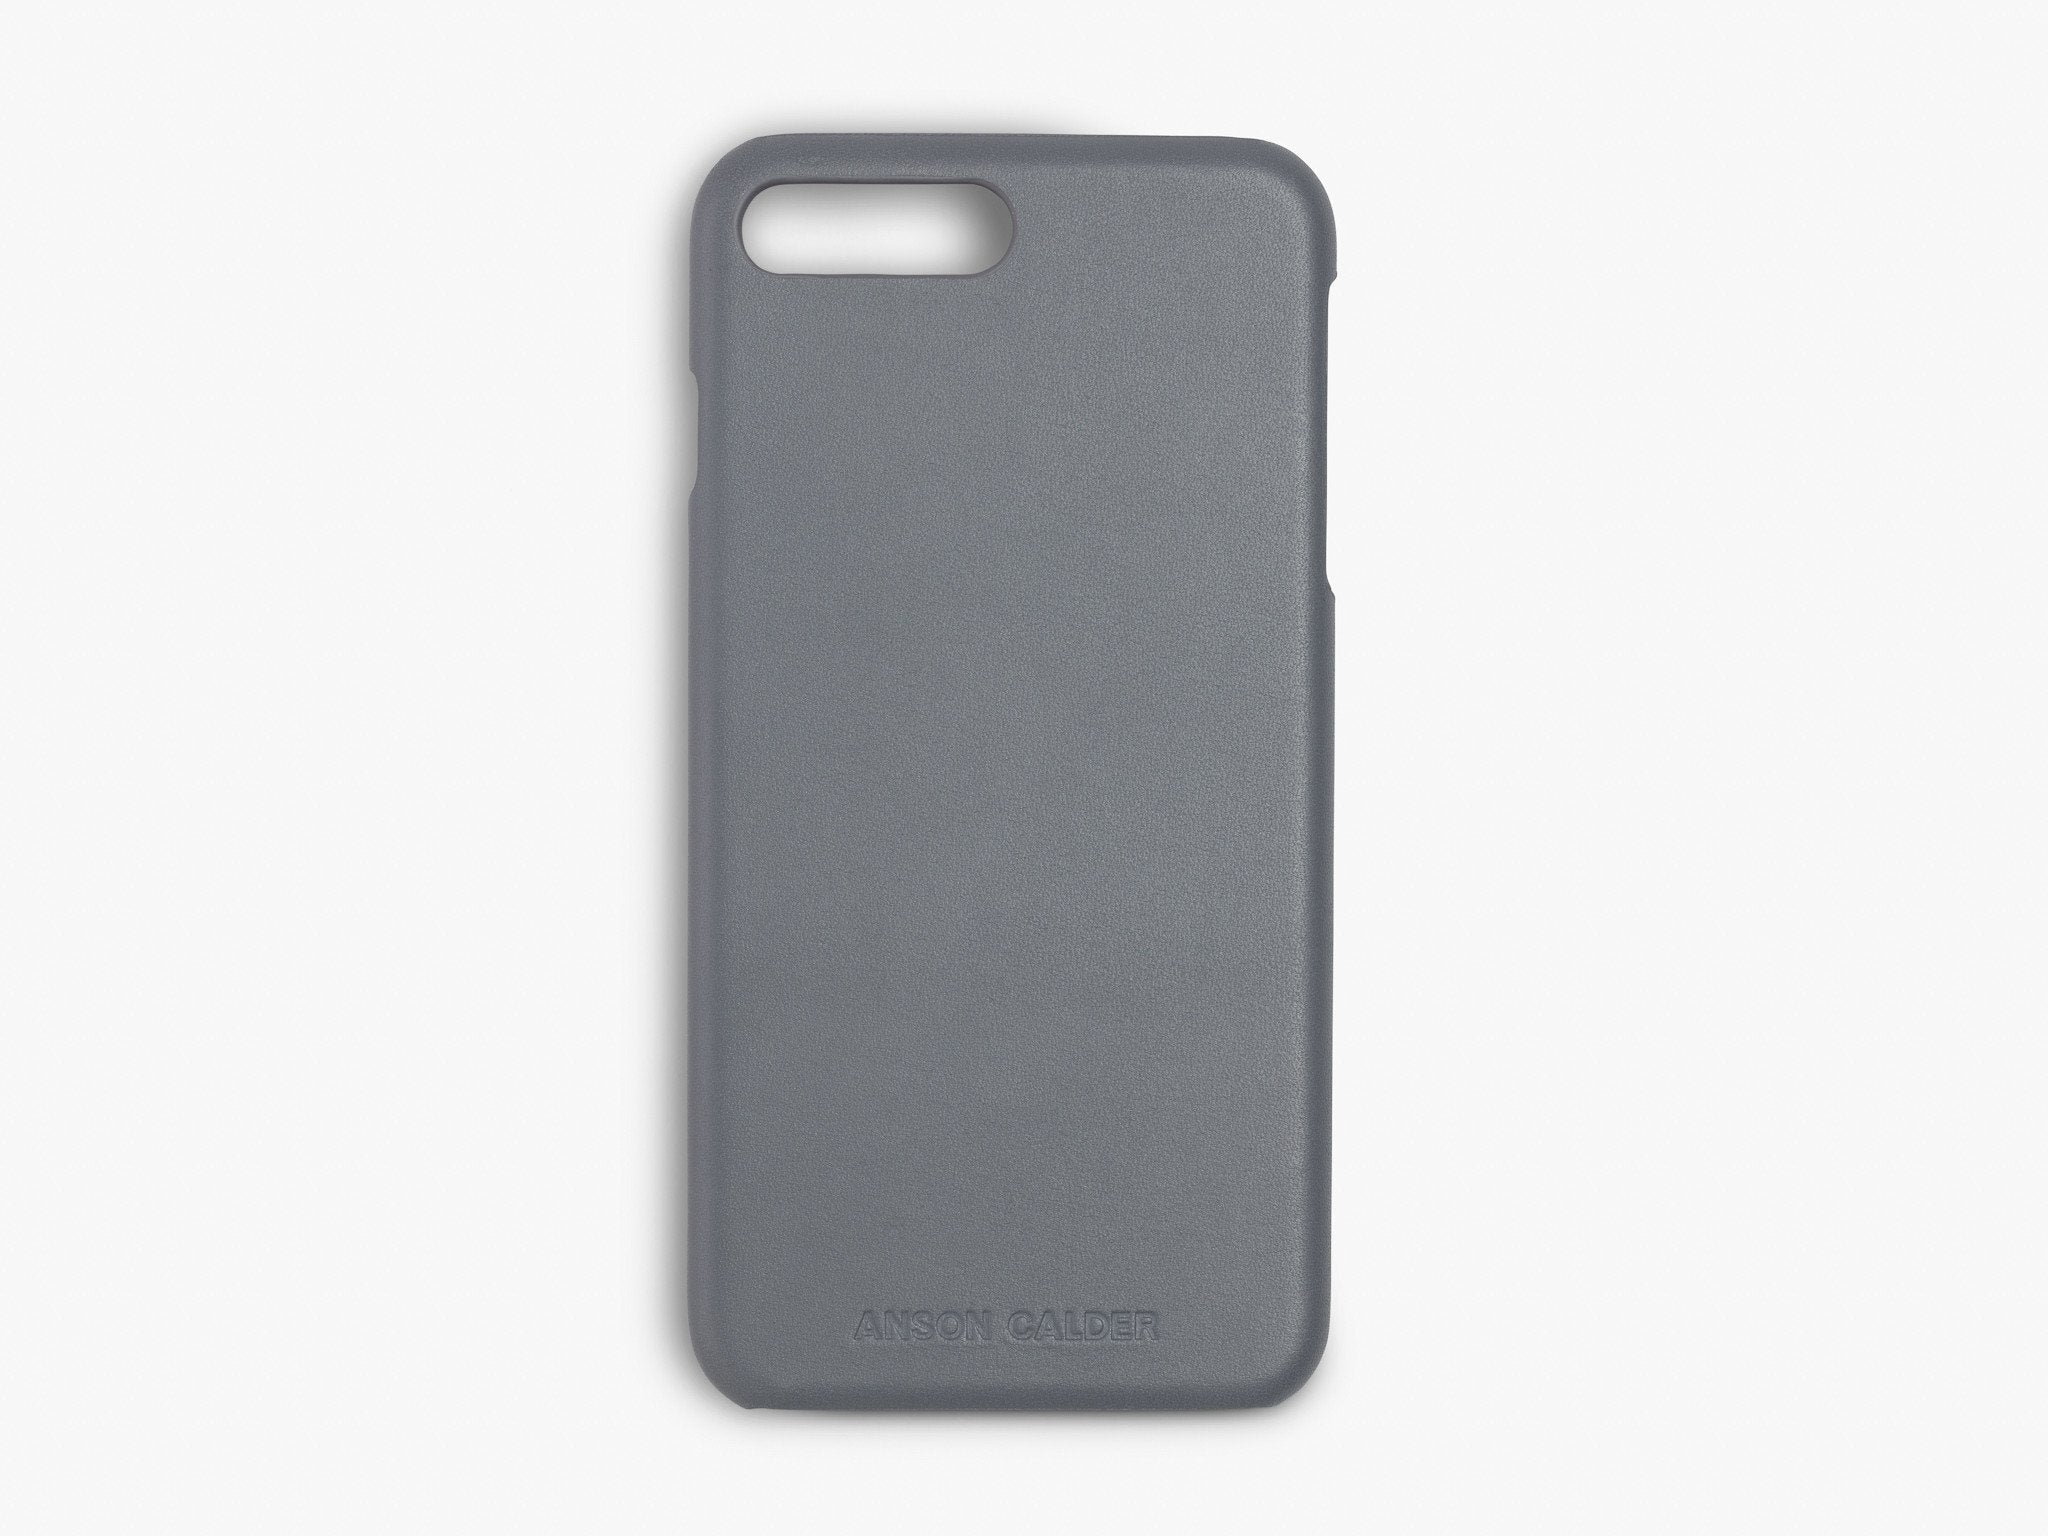 Do iPhone 7 Plus cases fit the 6 Plus?